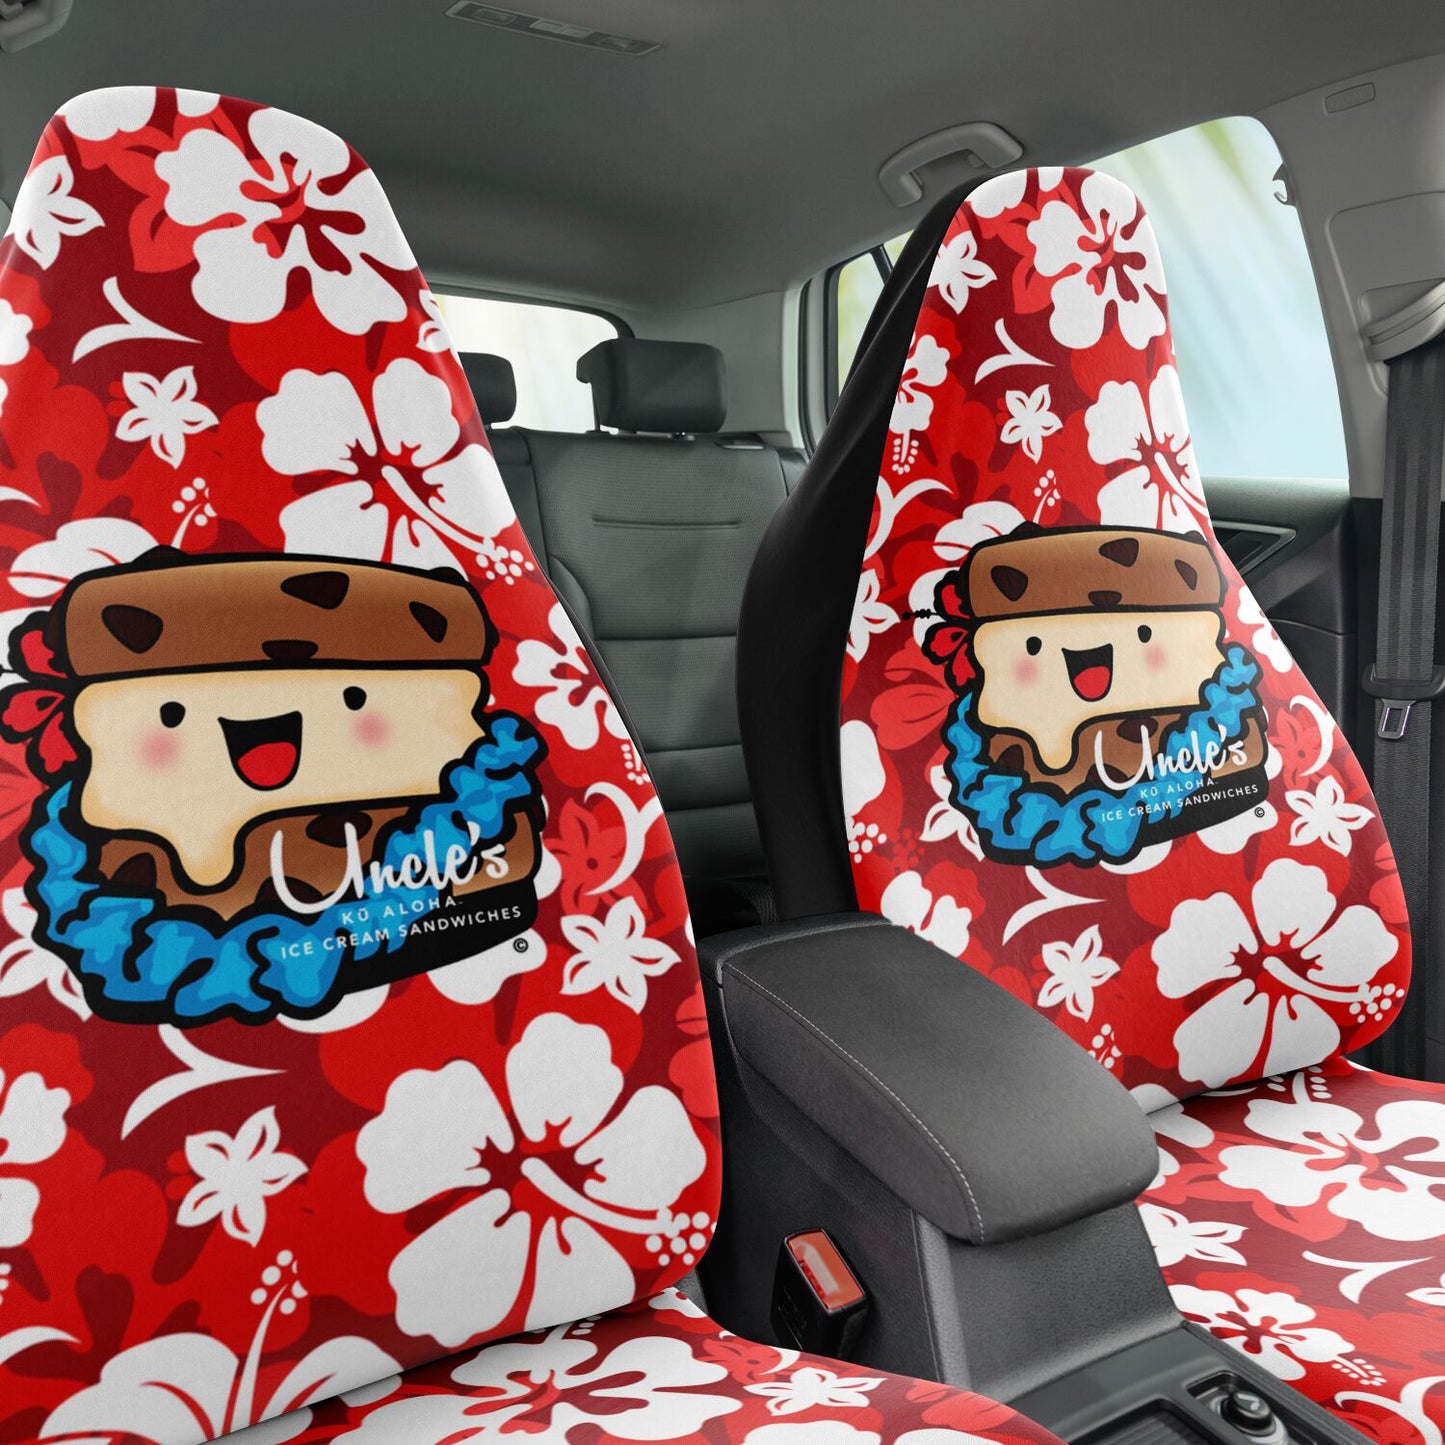 Sammie Car Seat Covers